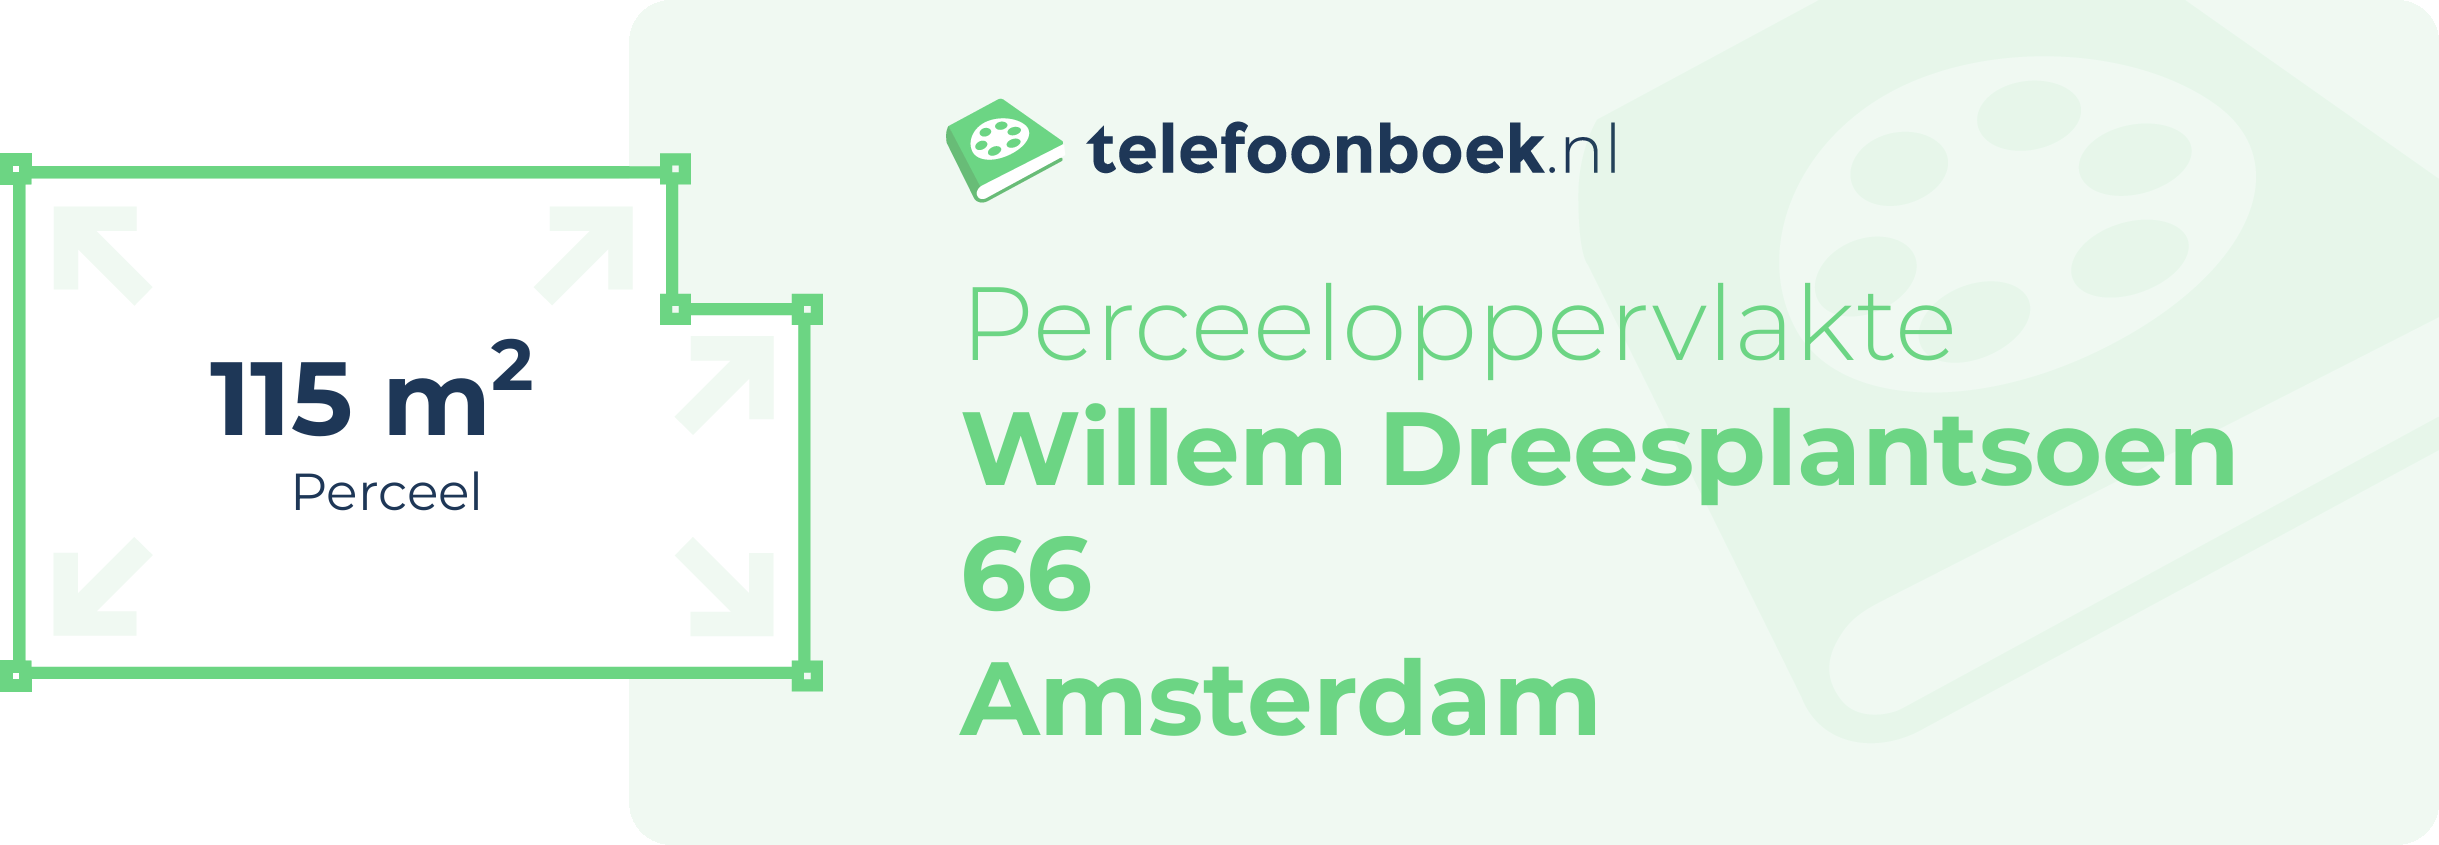 Perceeloppervlakte Willem Dreesplantsoen 66 Amsterdam